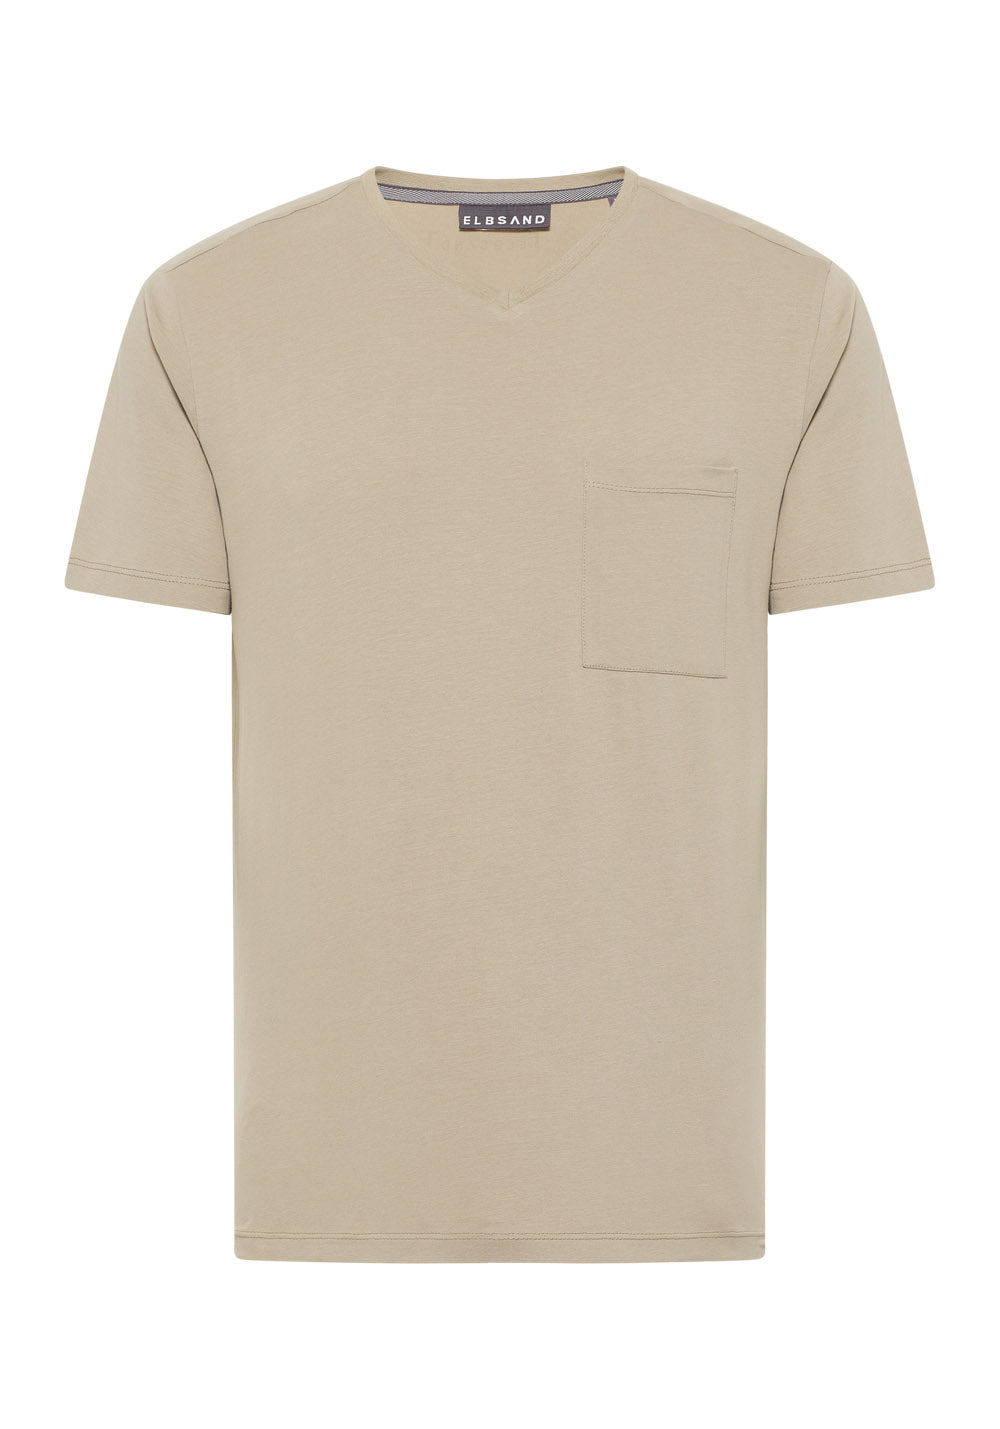 Elbsand | T-Shirt - Nelio | 953 Clay